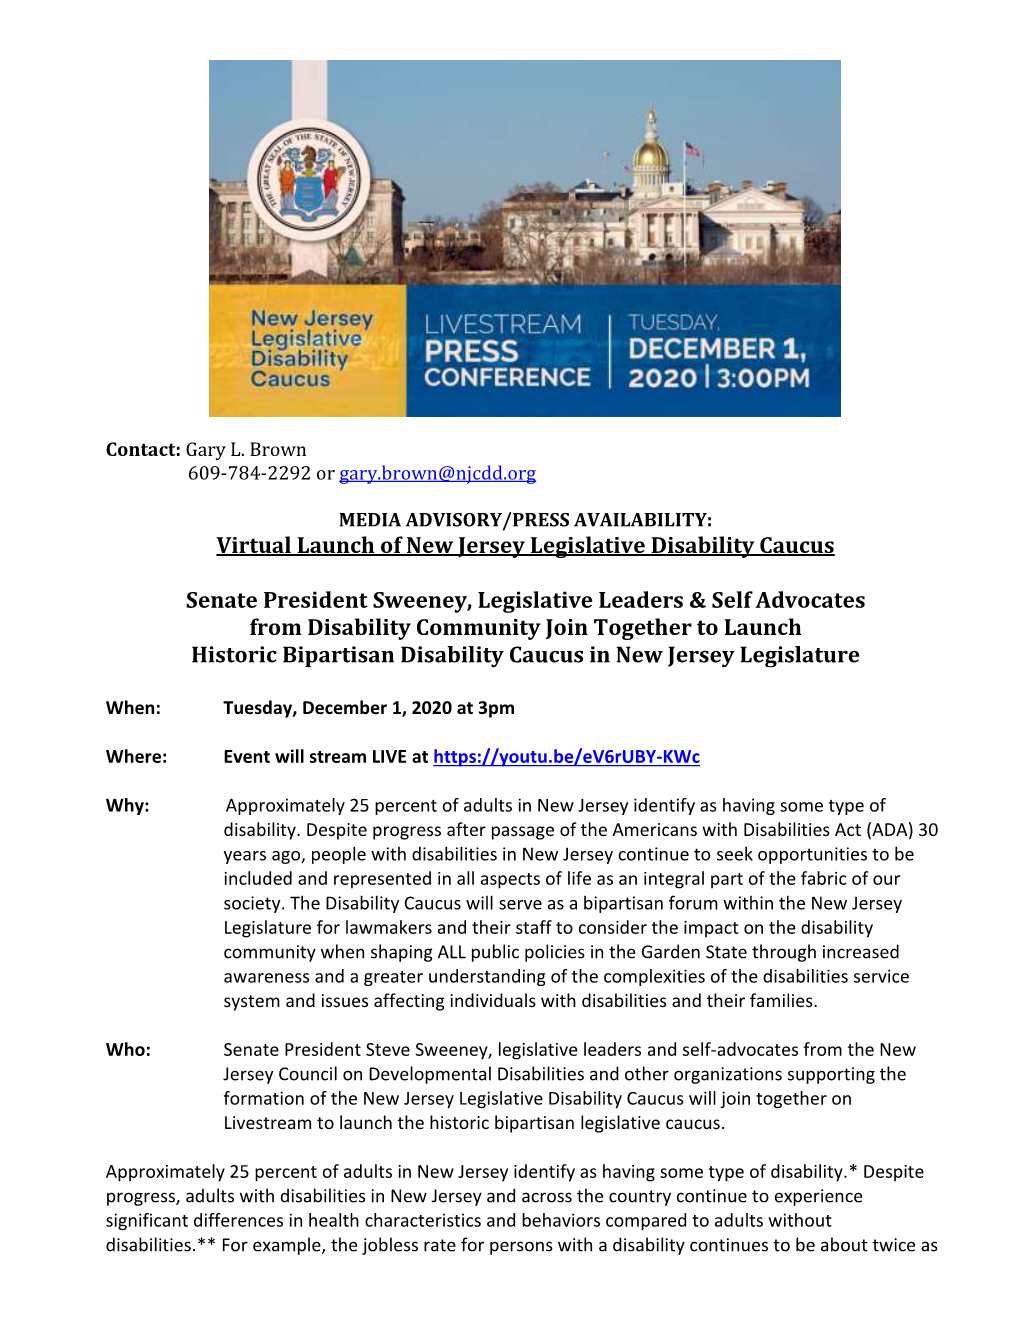 MEDIA ADVISORY/PRESS AVAILABILITY: Virtual Launch of New Jersey Legislative Disability Caucus